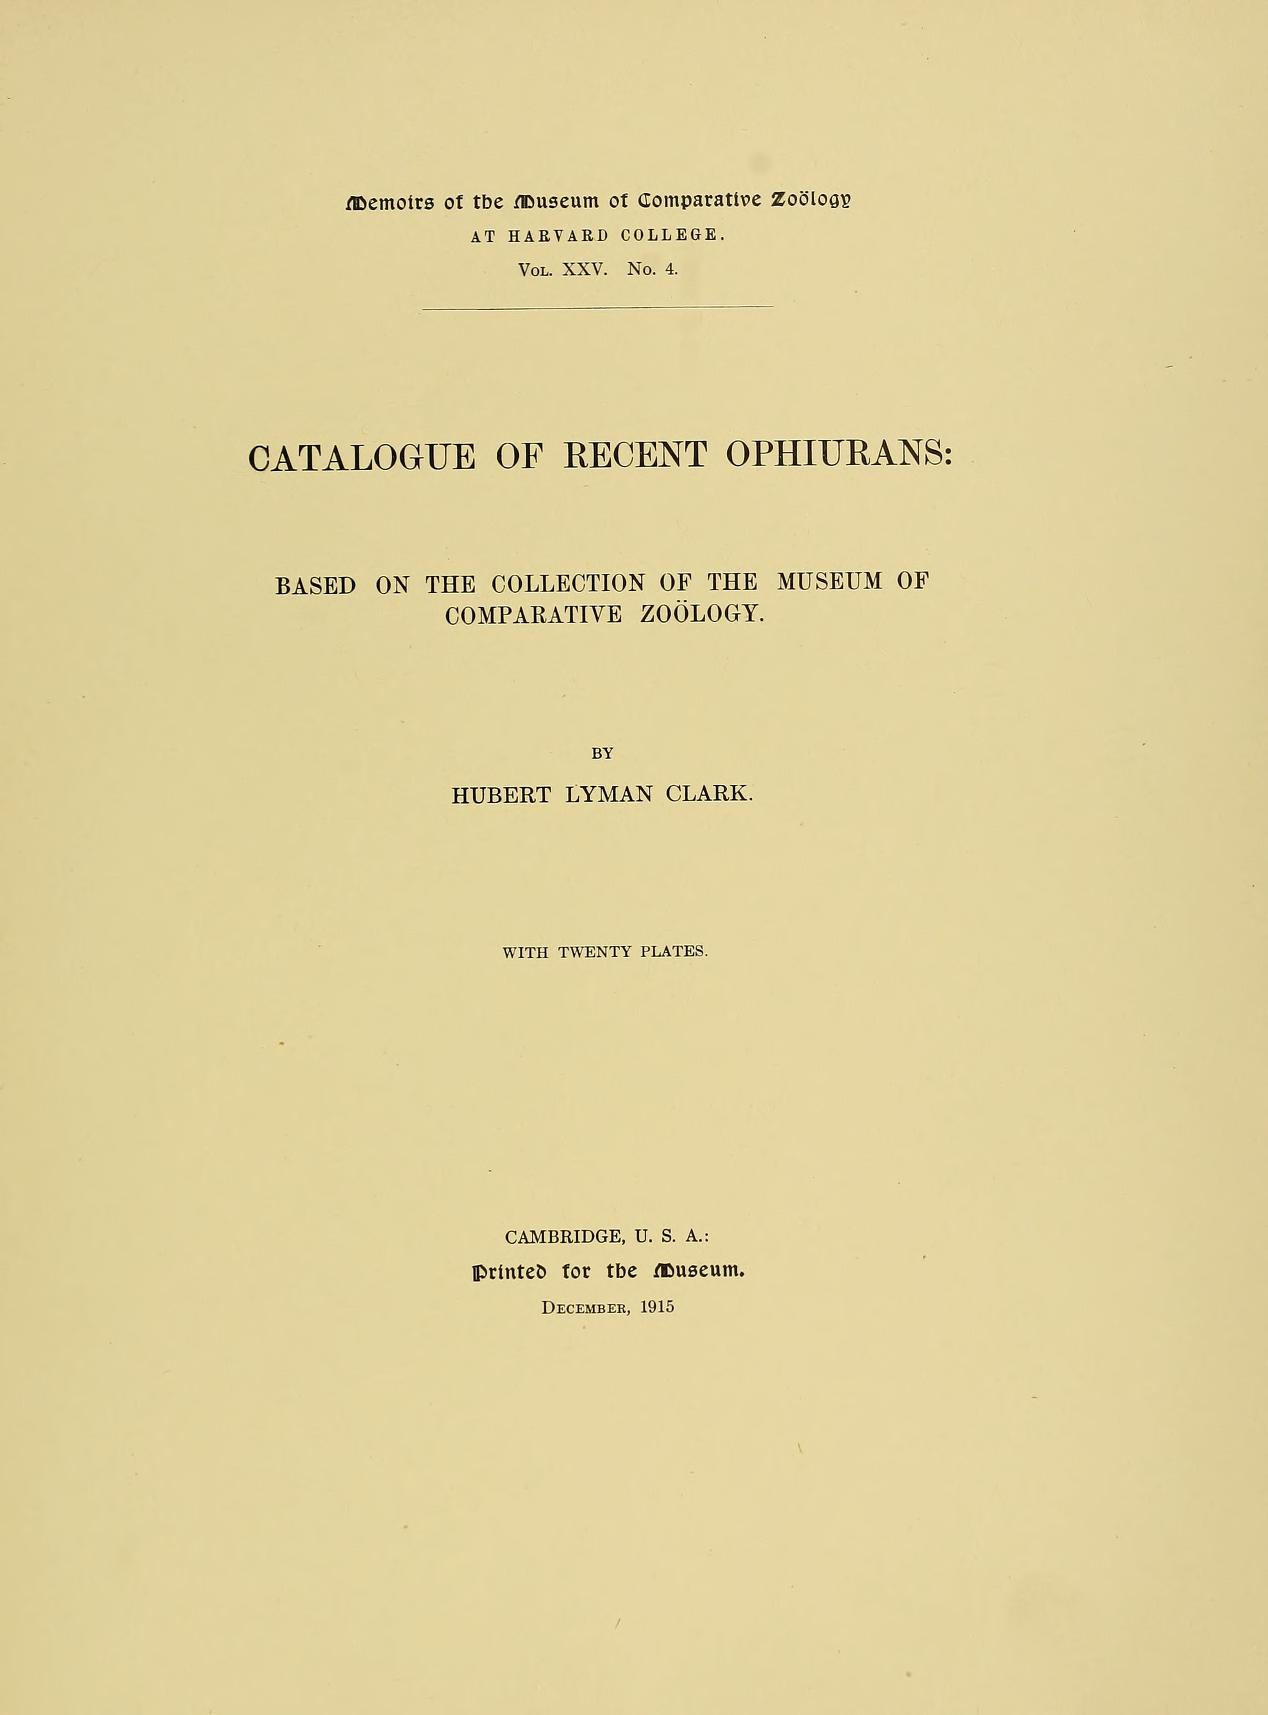 Media type: text, Clark 1915 Description: MCZ Memoirs Vol. XXV no. 4